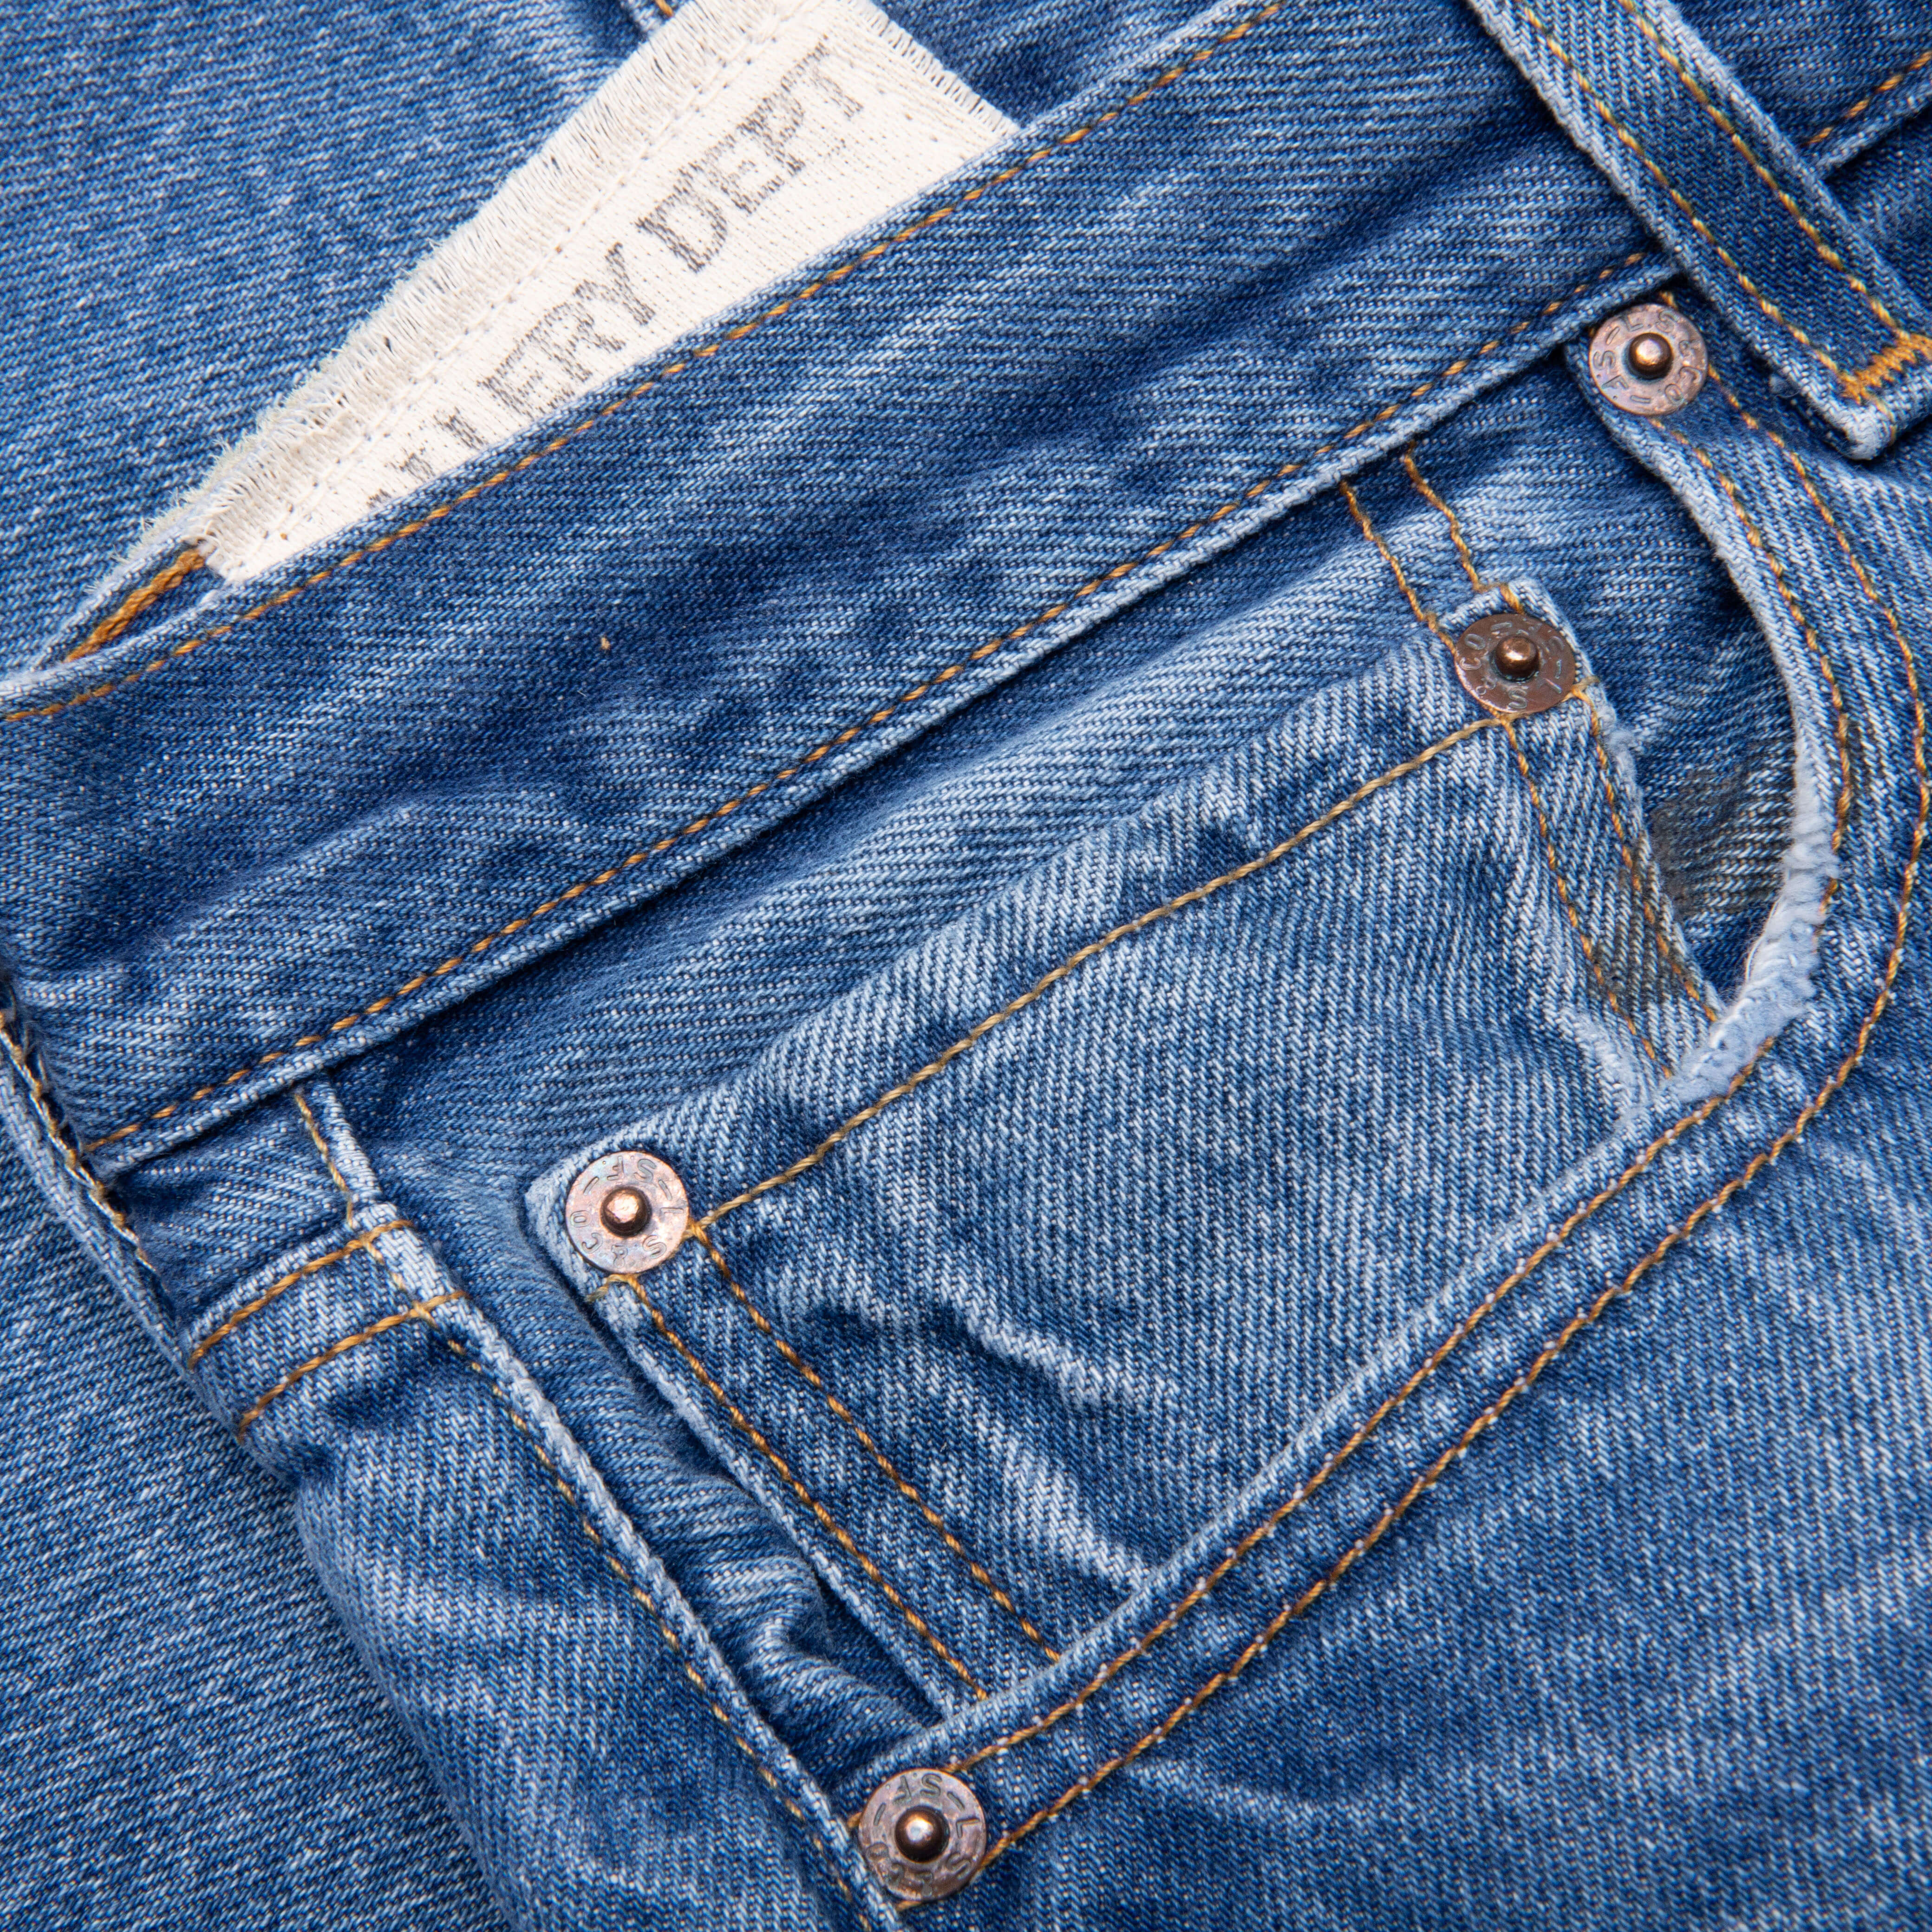 Tie Dye Skinny Ripped Pockets Zipper Up Cargo Pants - TD Mercado